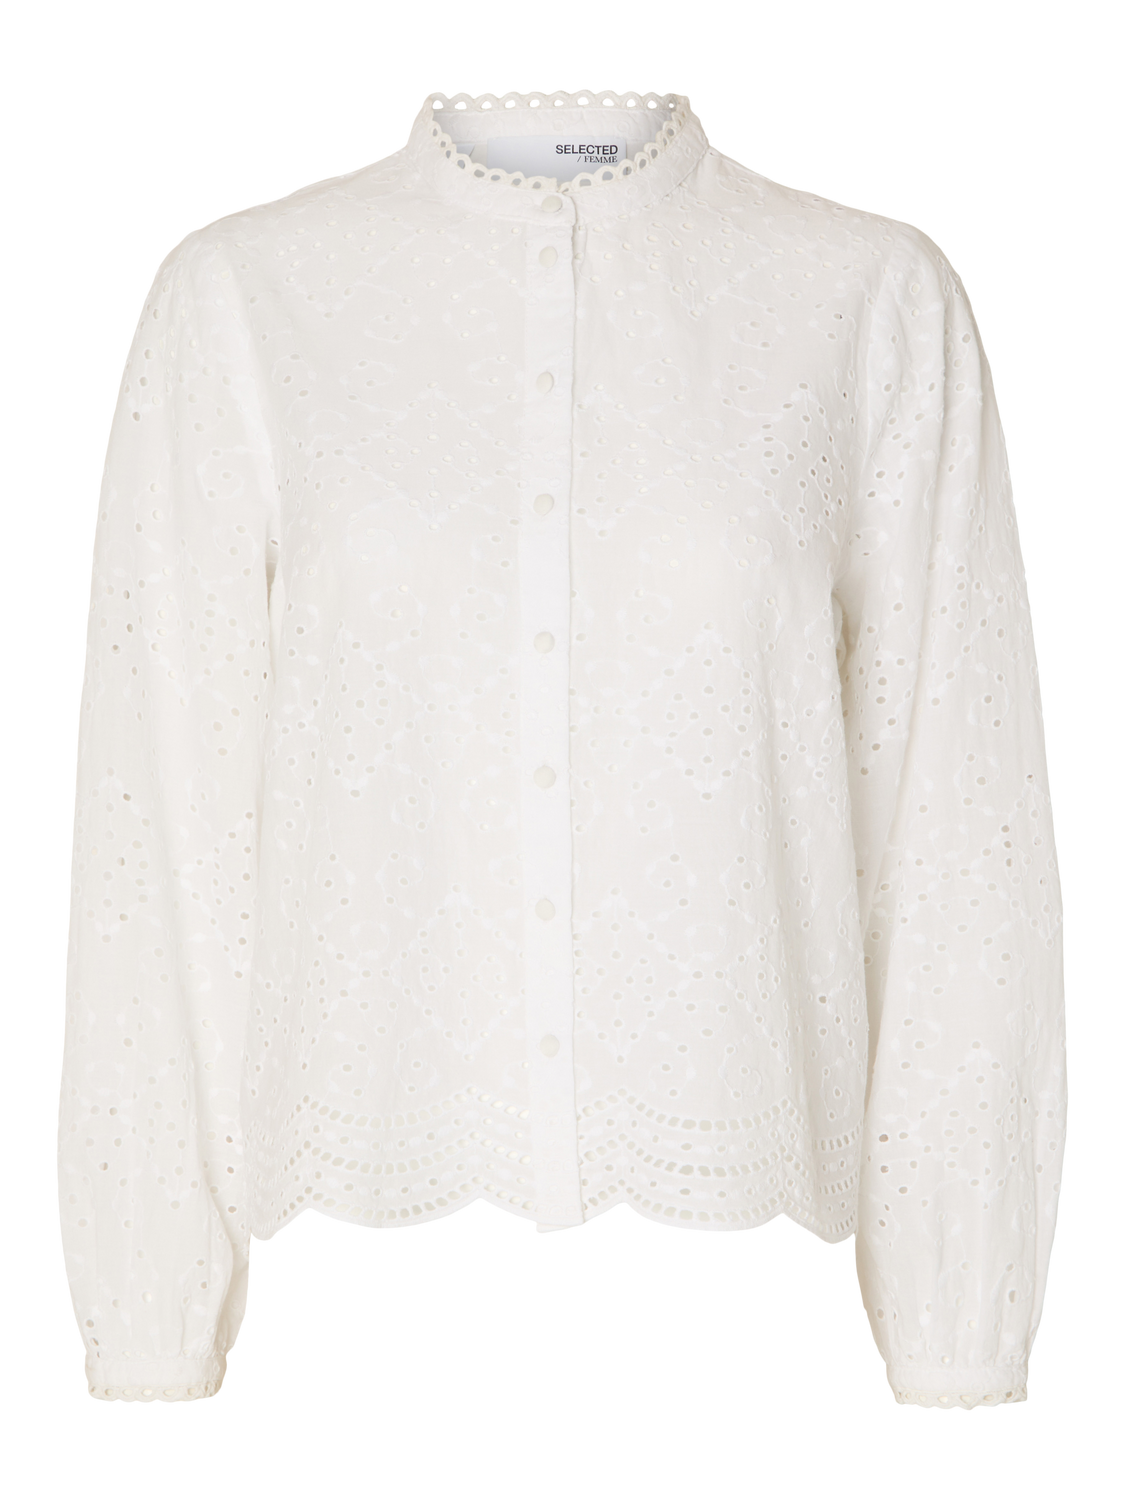 SLFTATIANA Shirts - Bright White